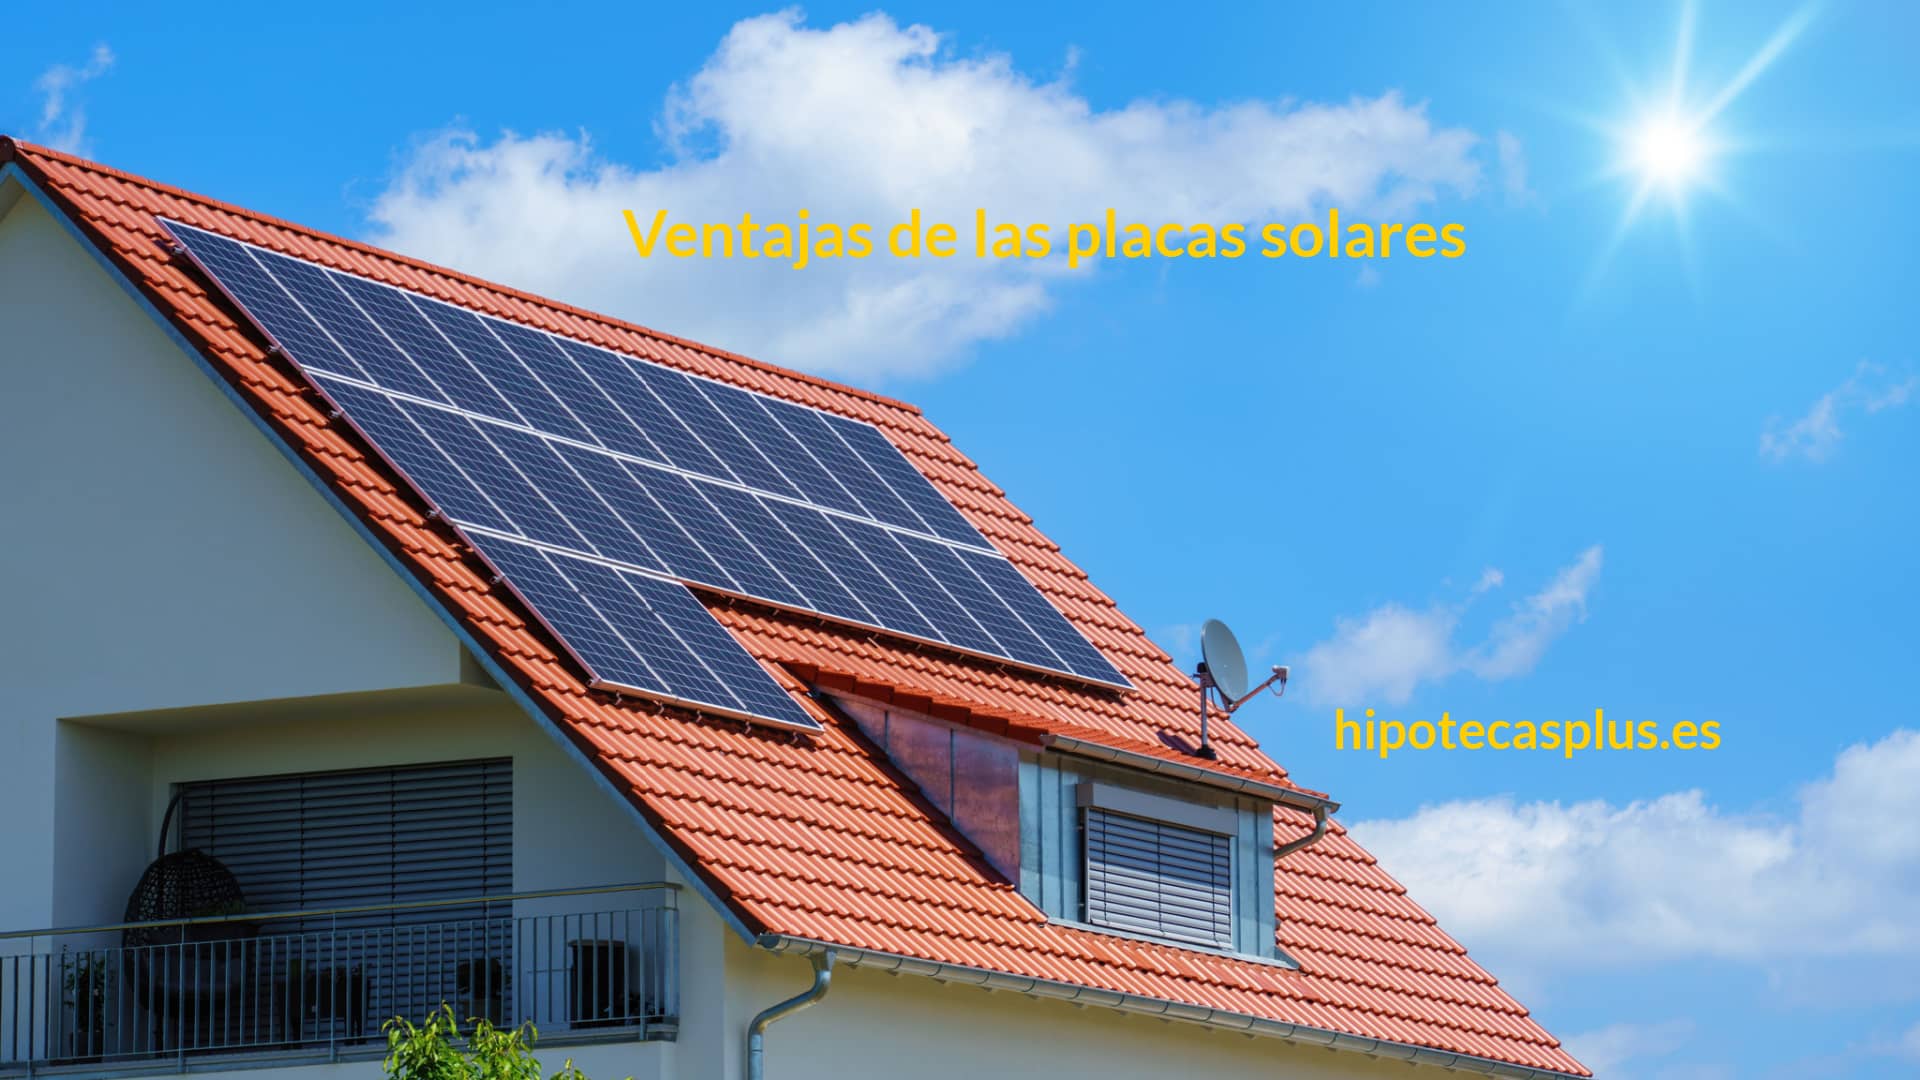 https://www.hipotecasplus.es/wp-content/uploads/HipotecasPlus-Ventajas-de-las-placas-solares.jpg